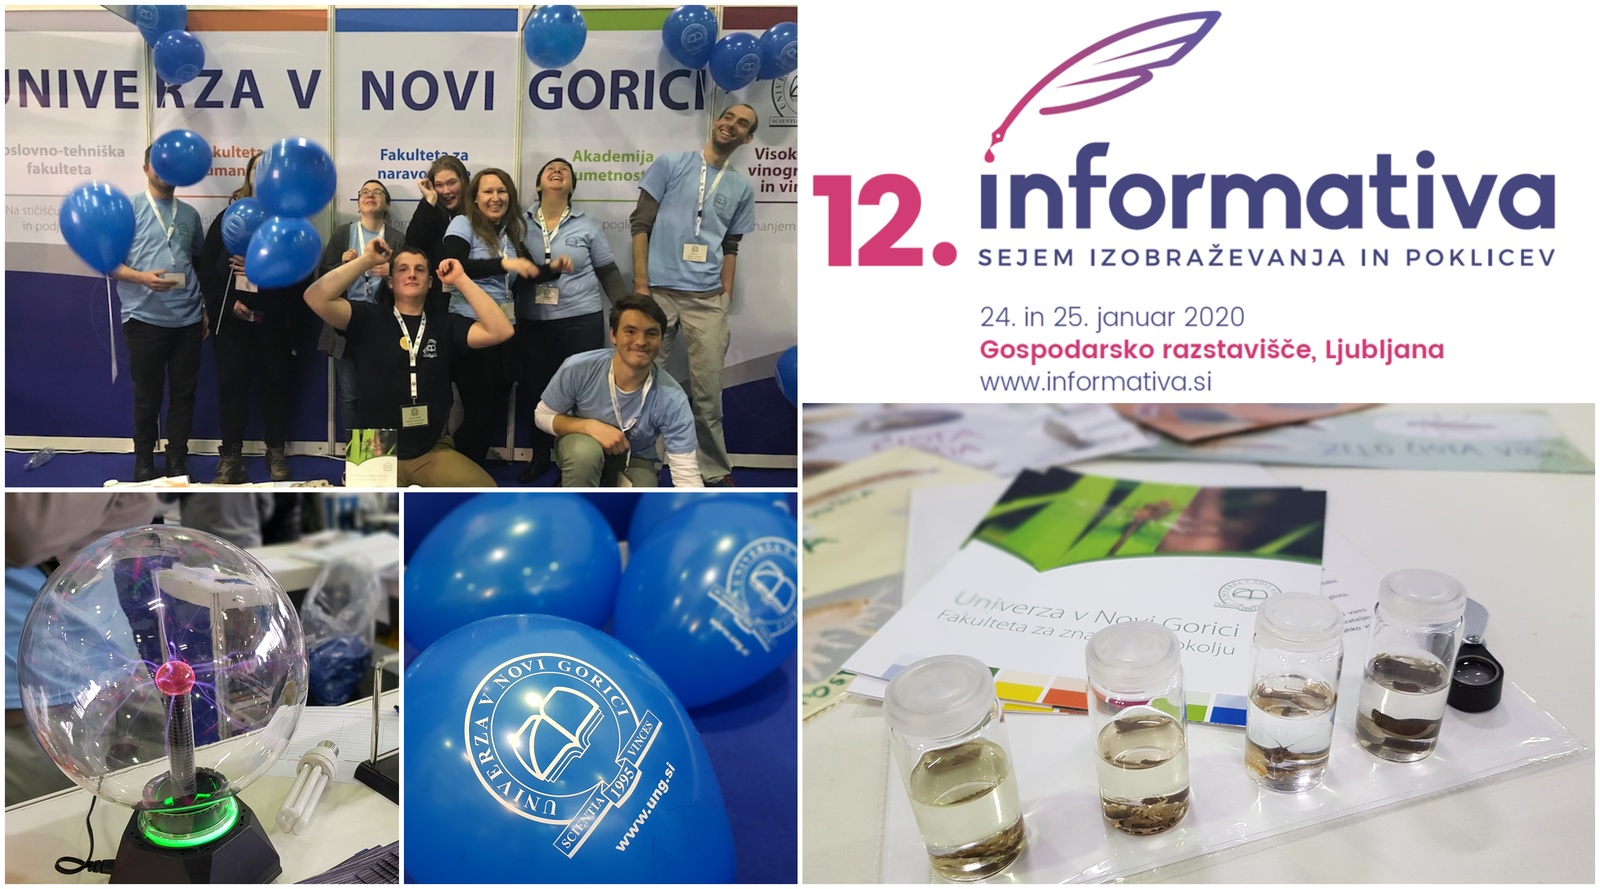 University of Nova Gorica taking part in the Education and Career Fair